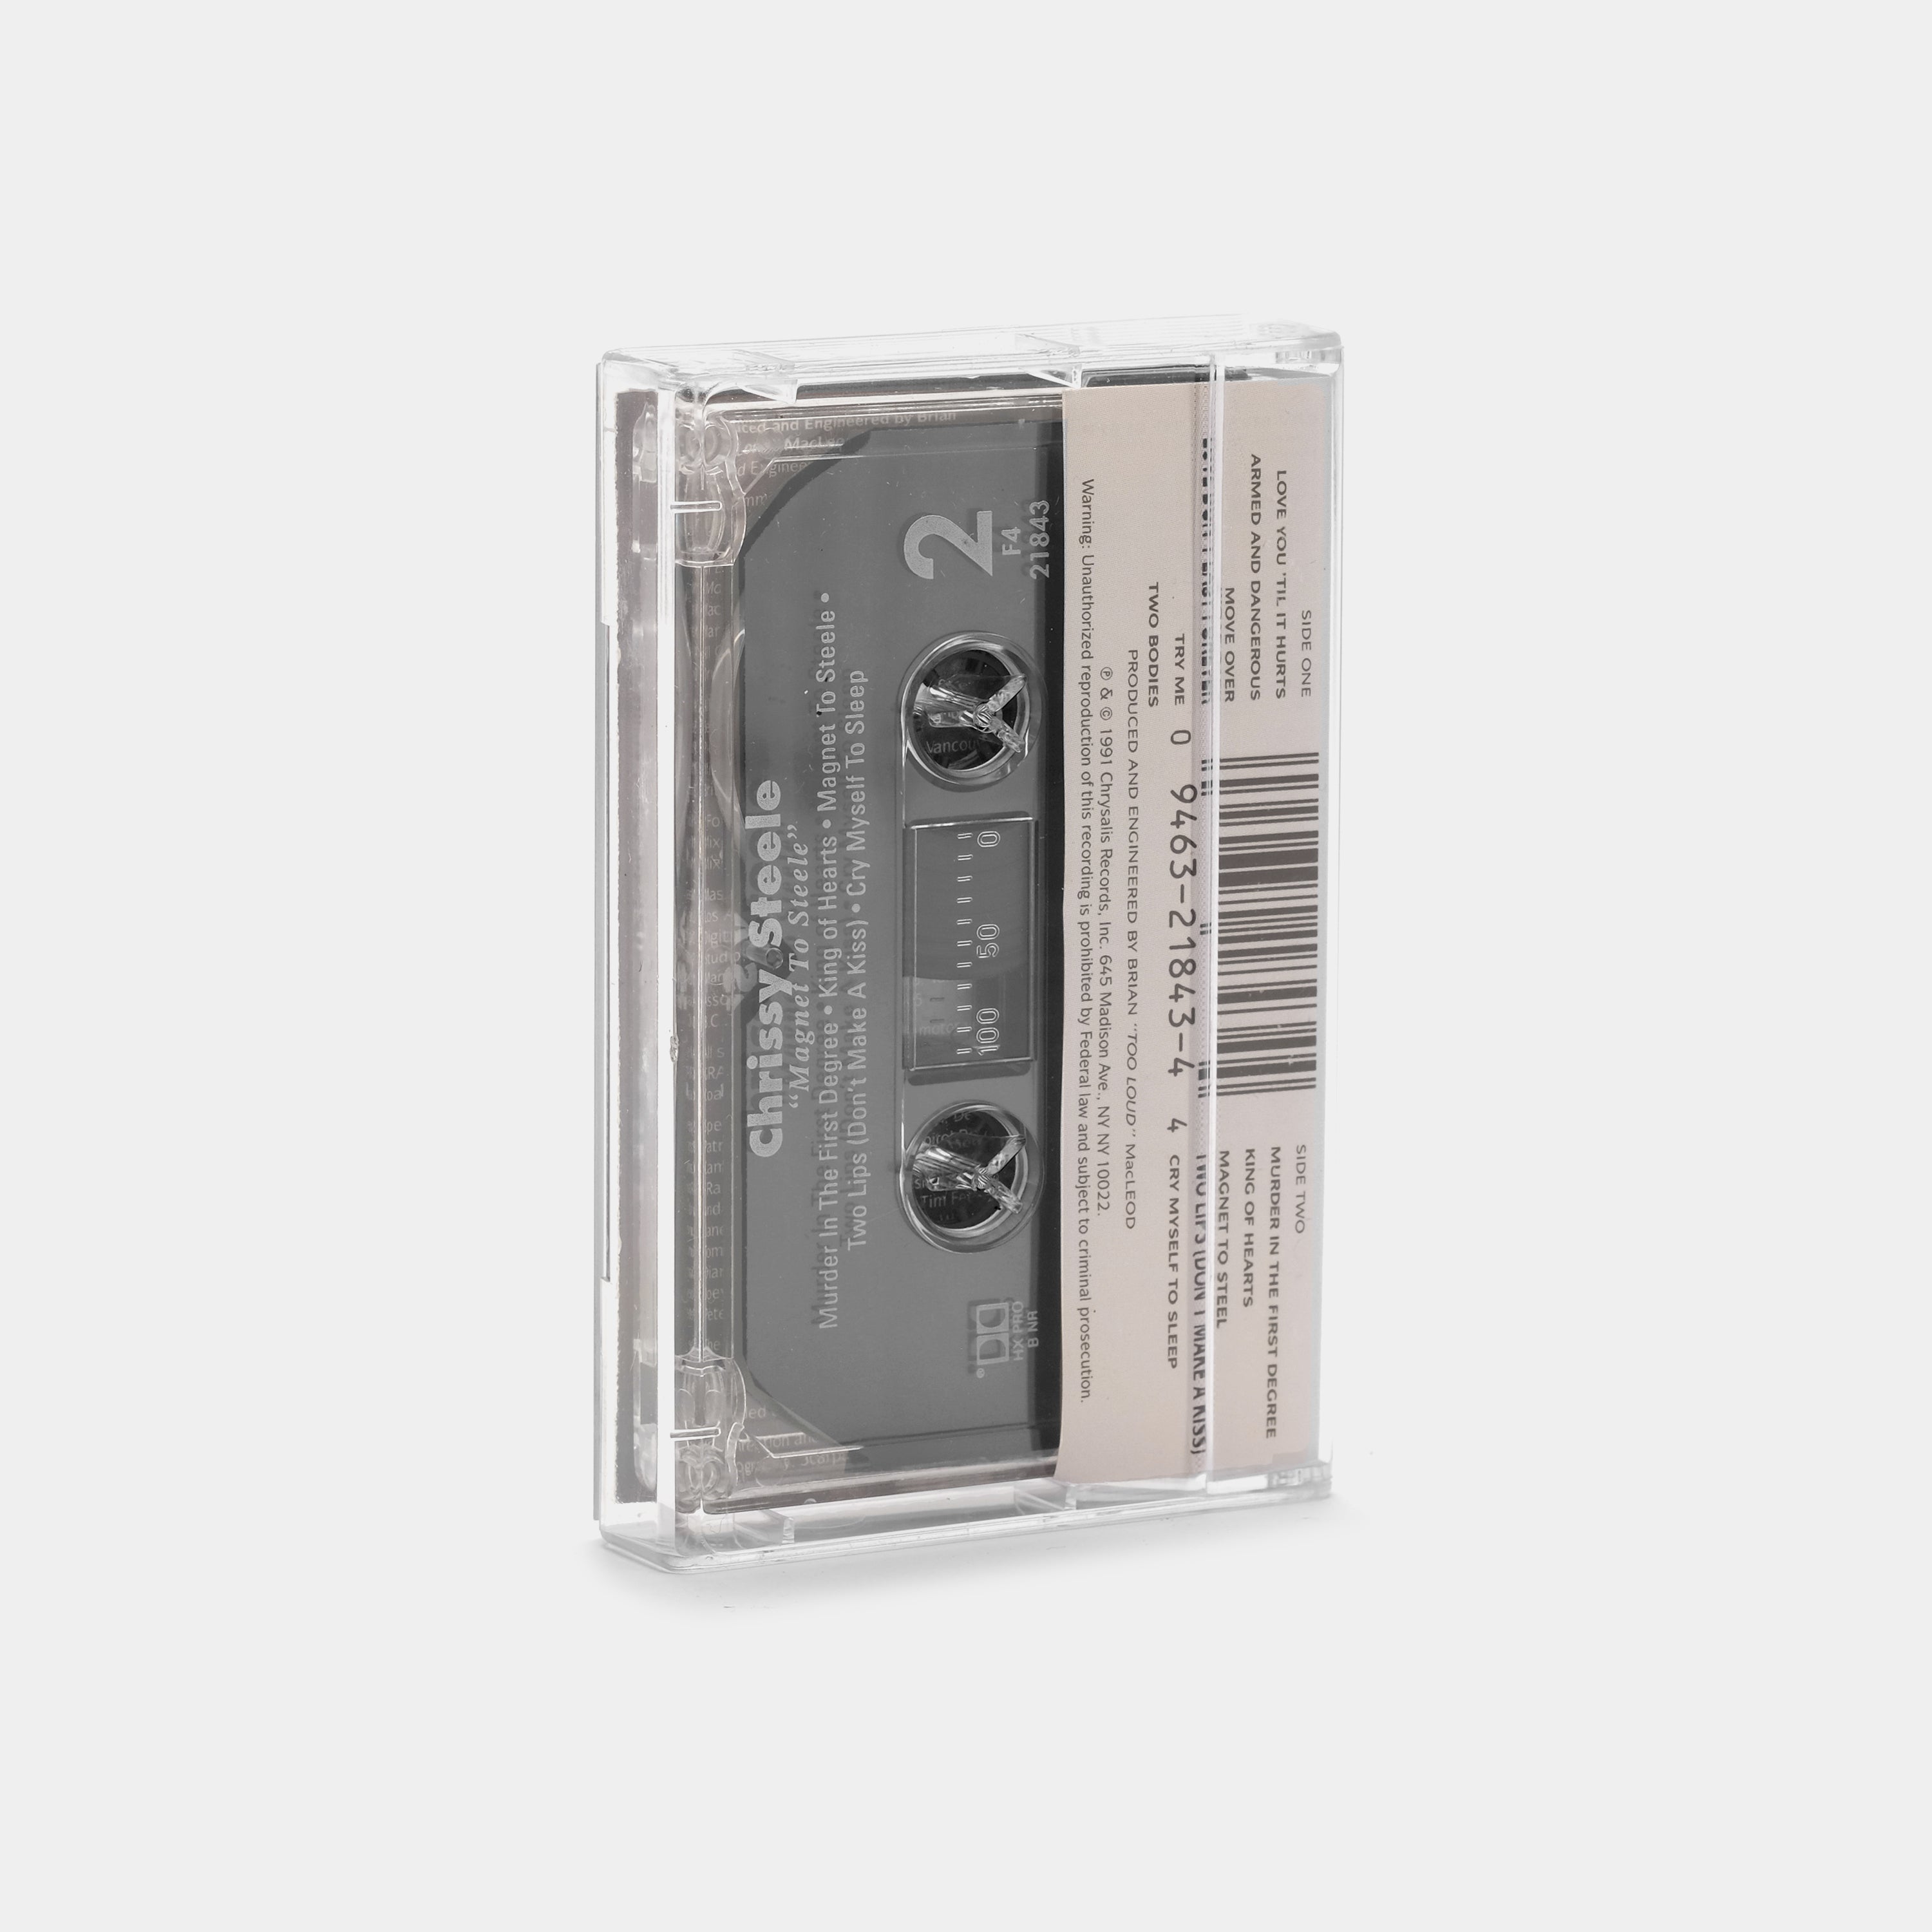 Chrissy Steele - Magnet To Steele Cassette Tape